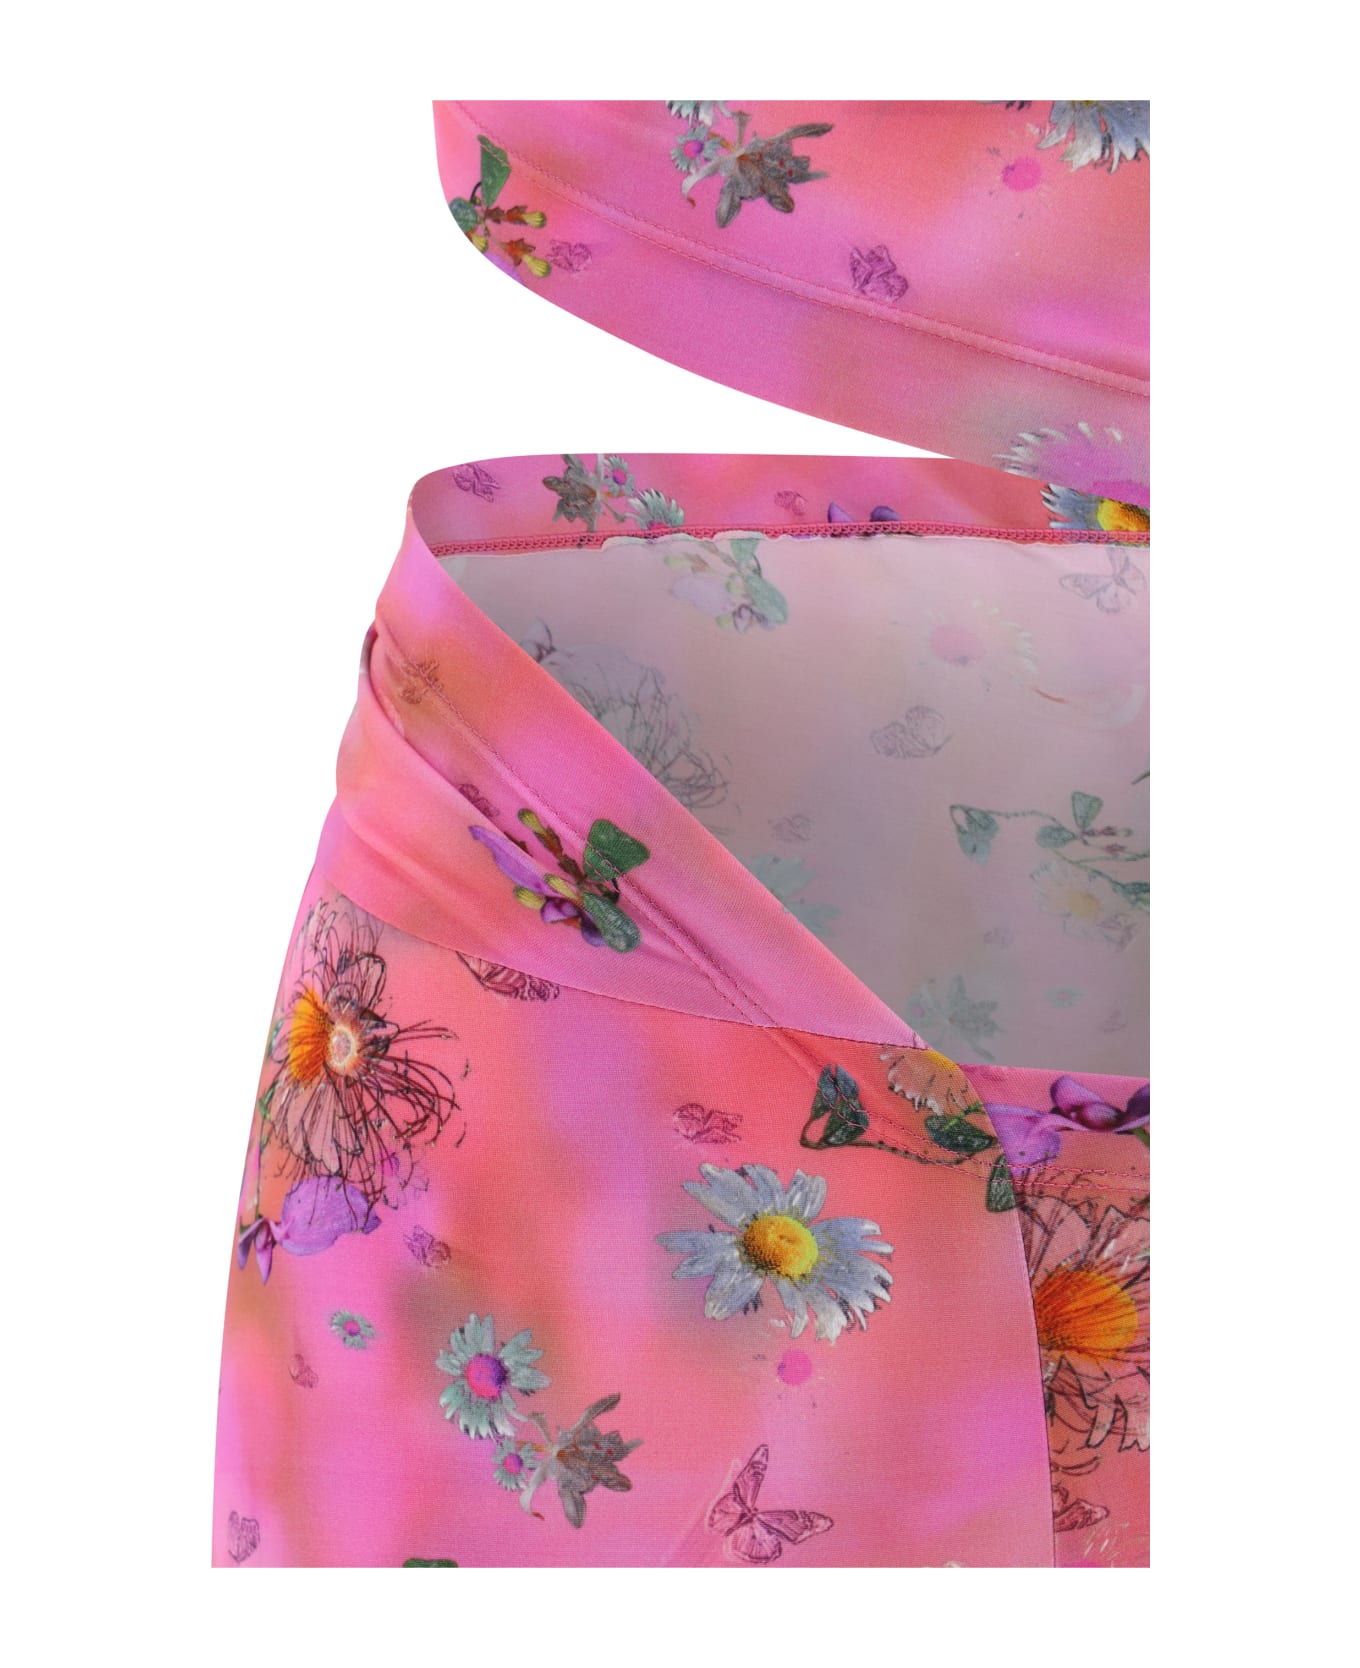 Maccapani Jumpsuit Dress - Clothing Pantalon teint à imprimé ensemble Kaki